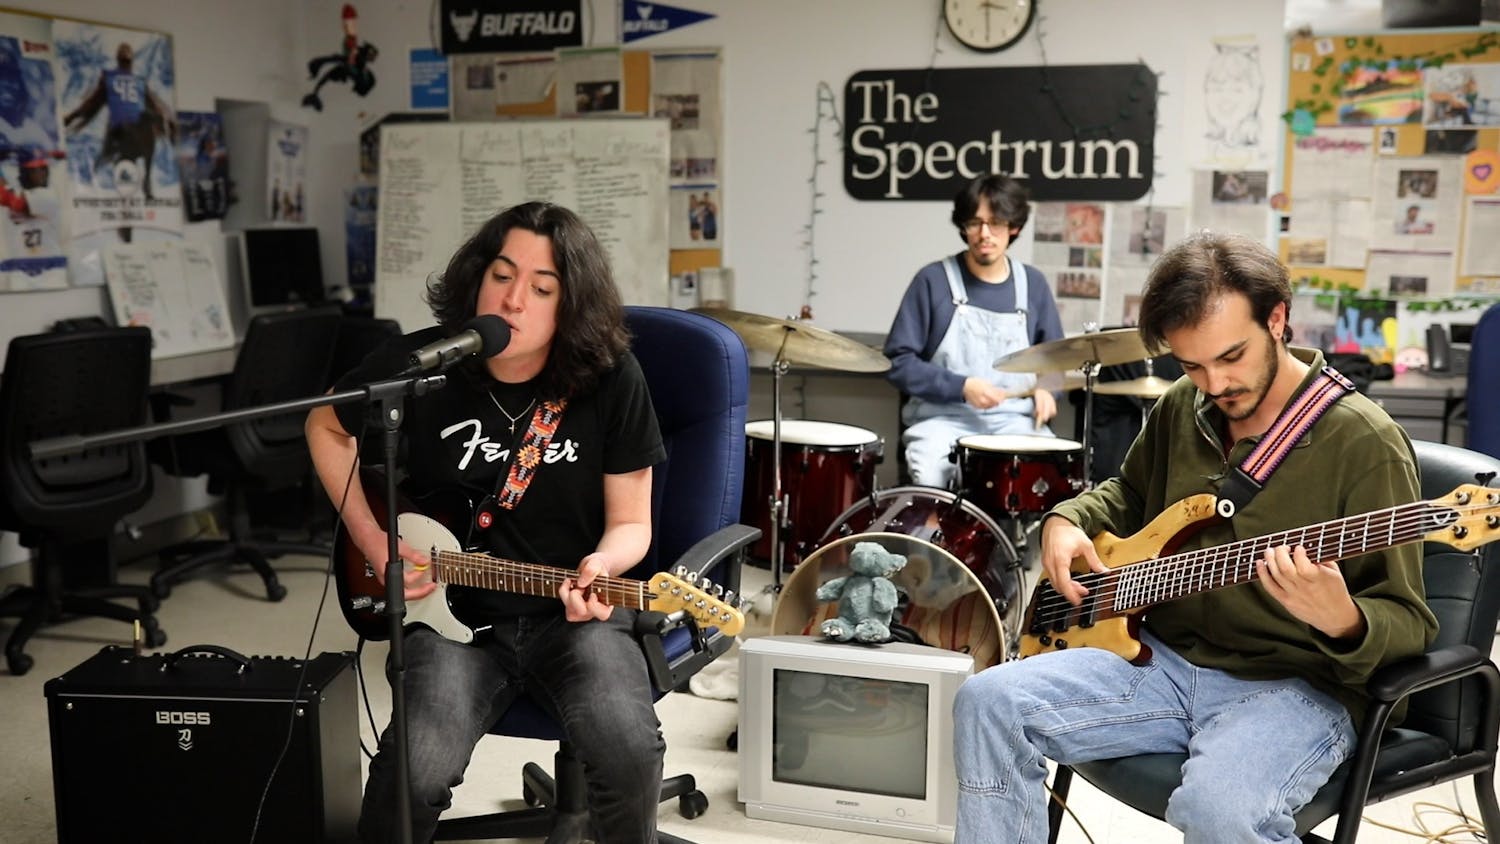 Orange Dog Club performed a “Tiny Desk” concert in the Spectrum newsroom.